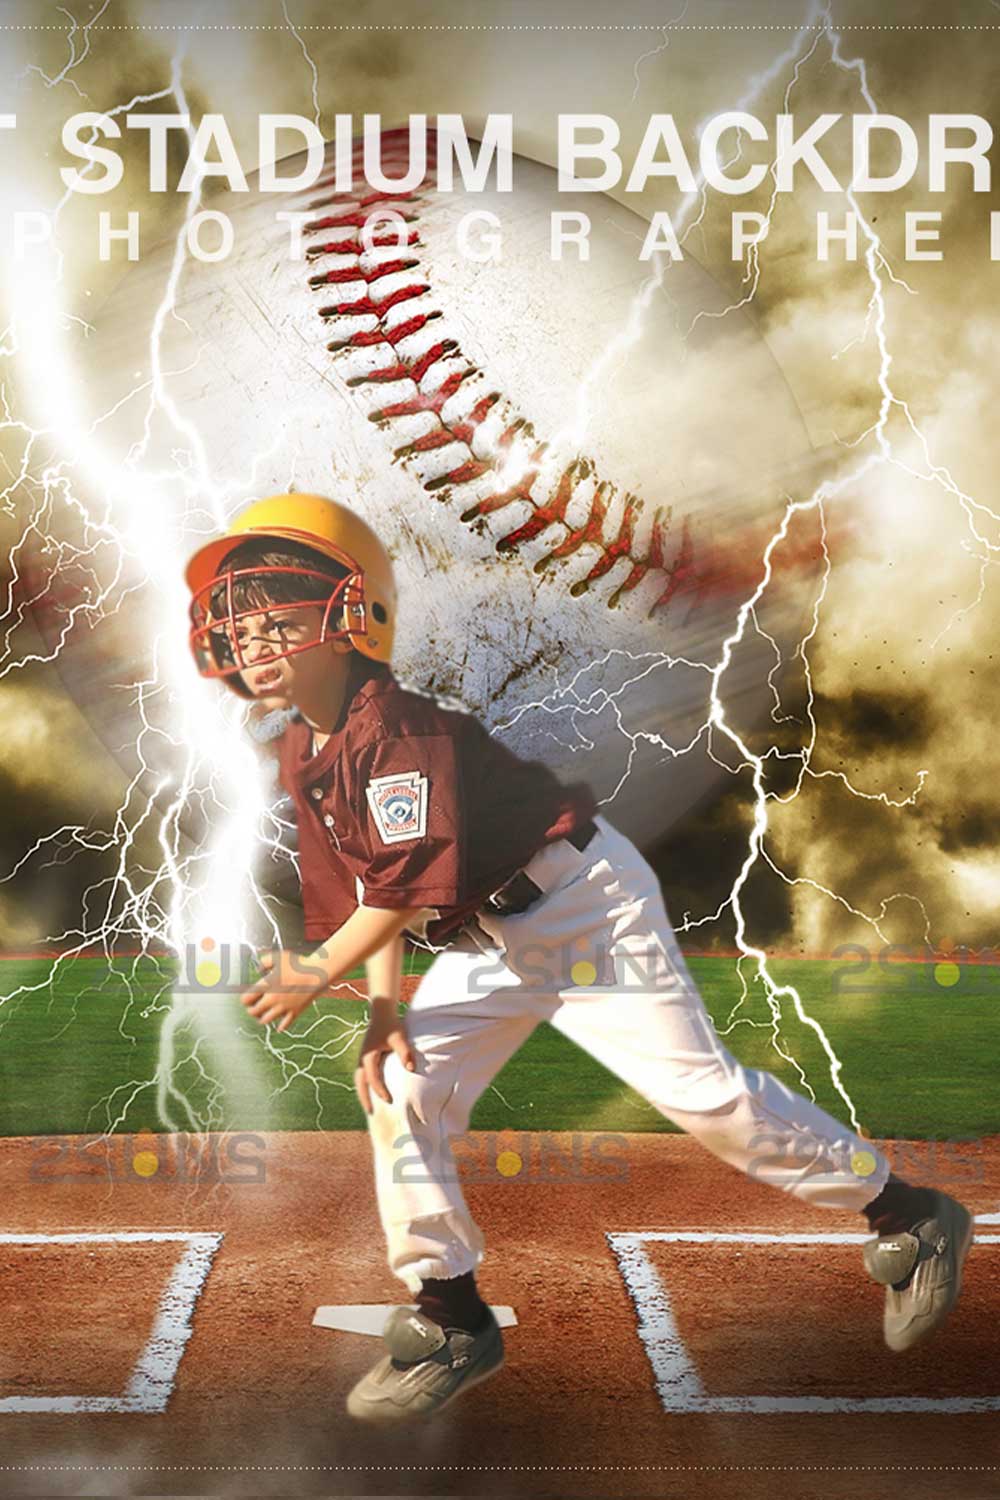 Modern Baseball Backdrop Sports Digital Photoshop Overlay Pinterest Image.